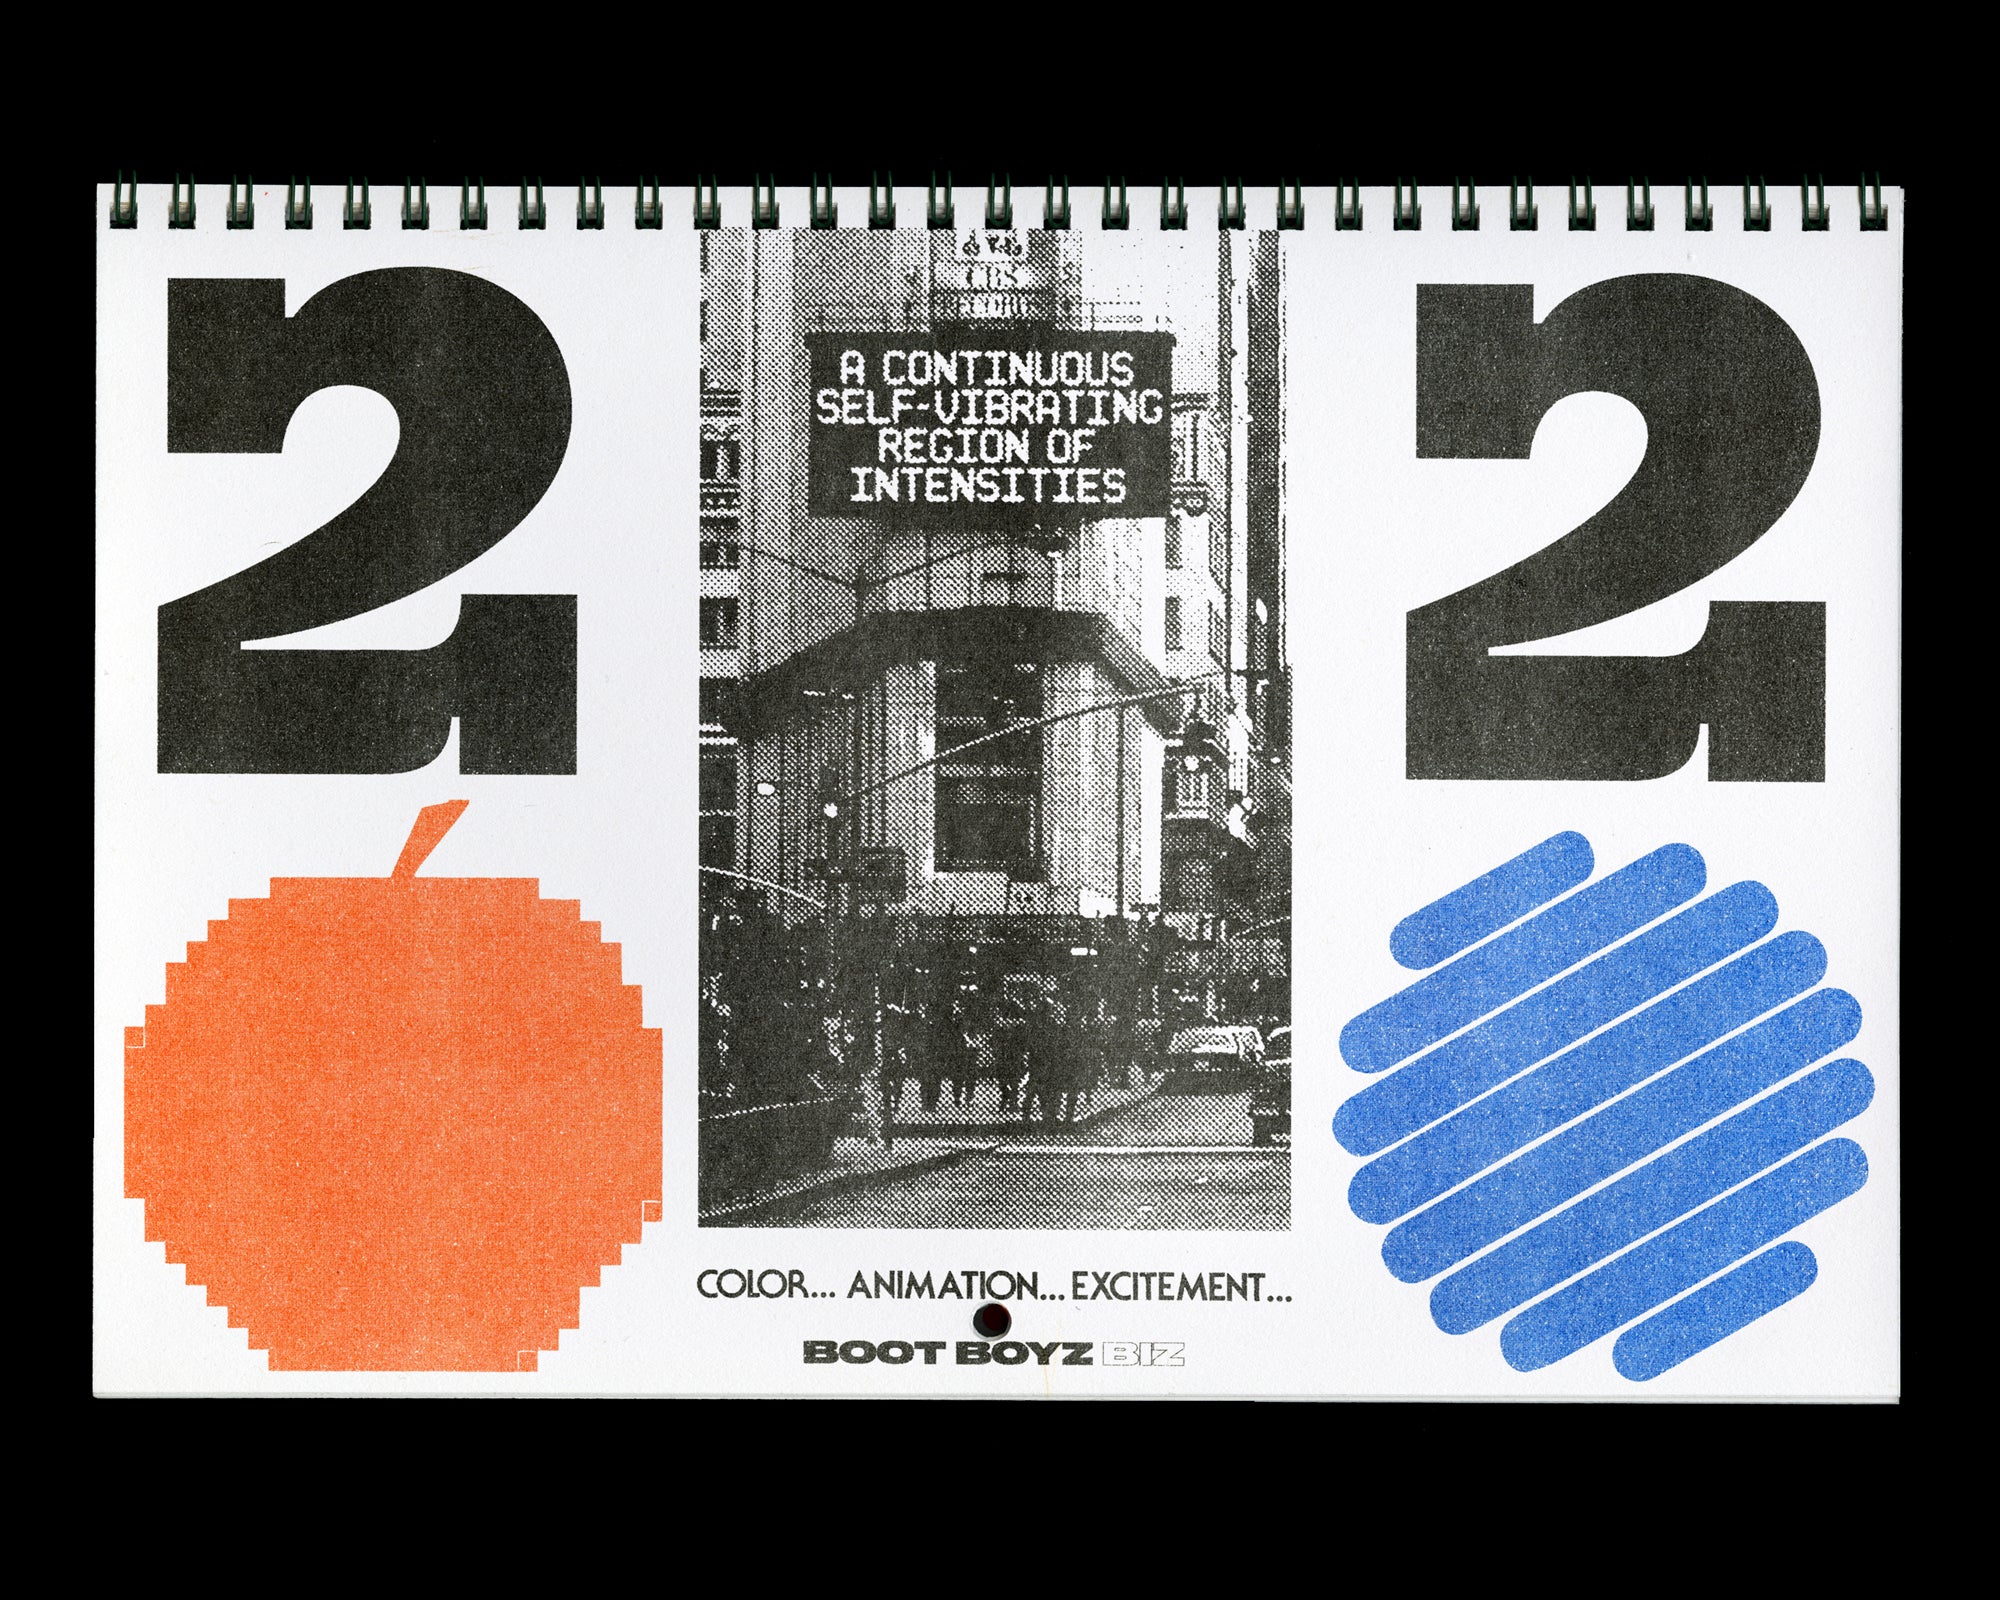 Times Square / Time Squares — 2020 Calendar